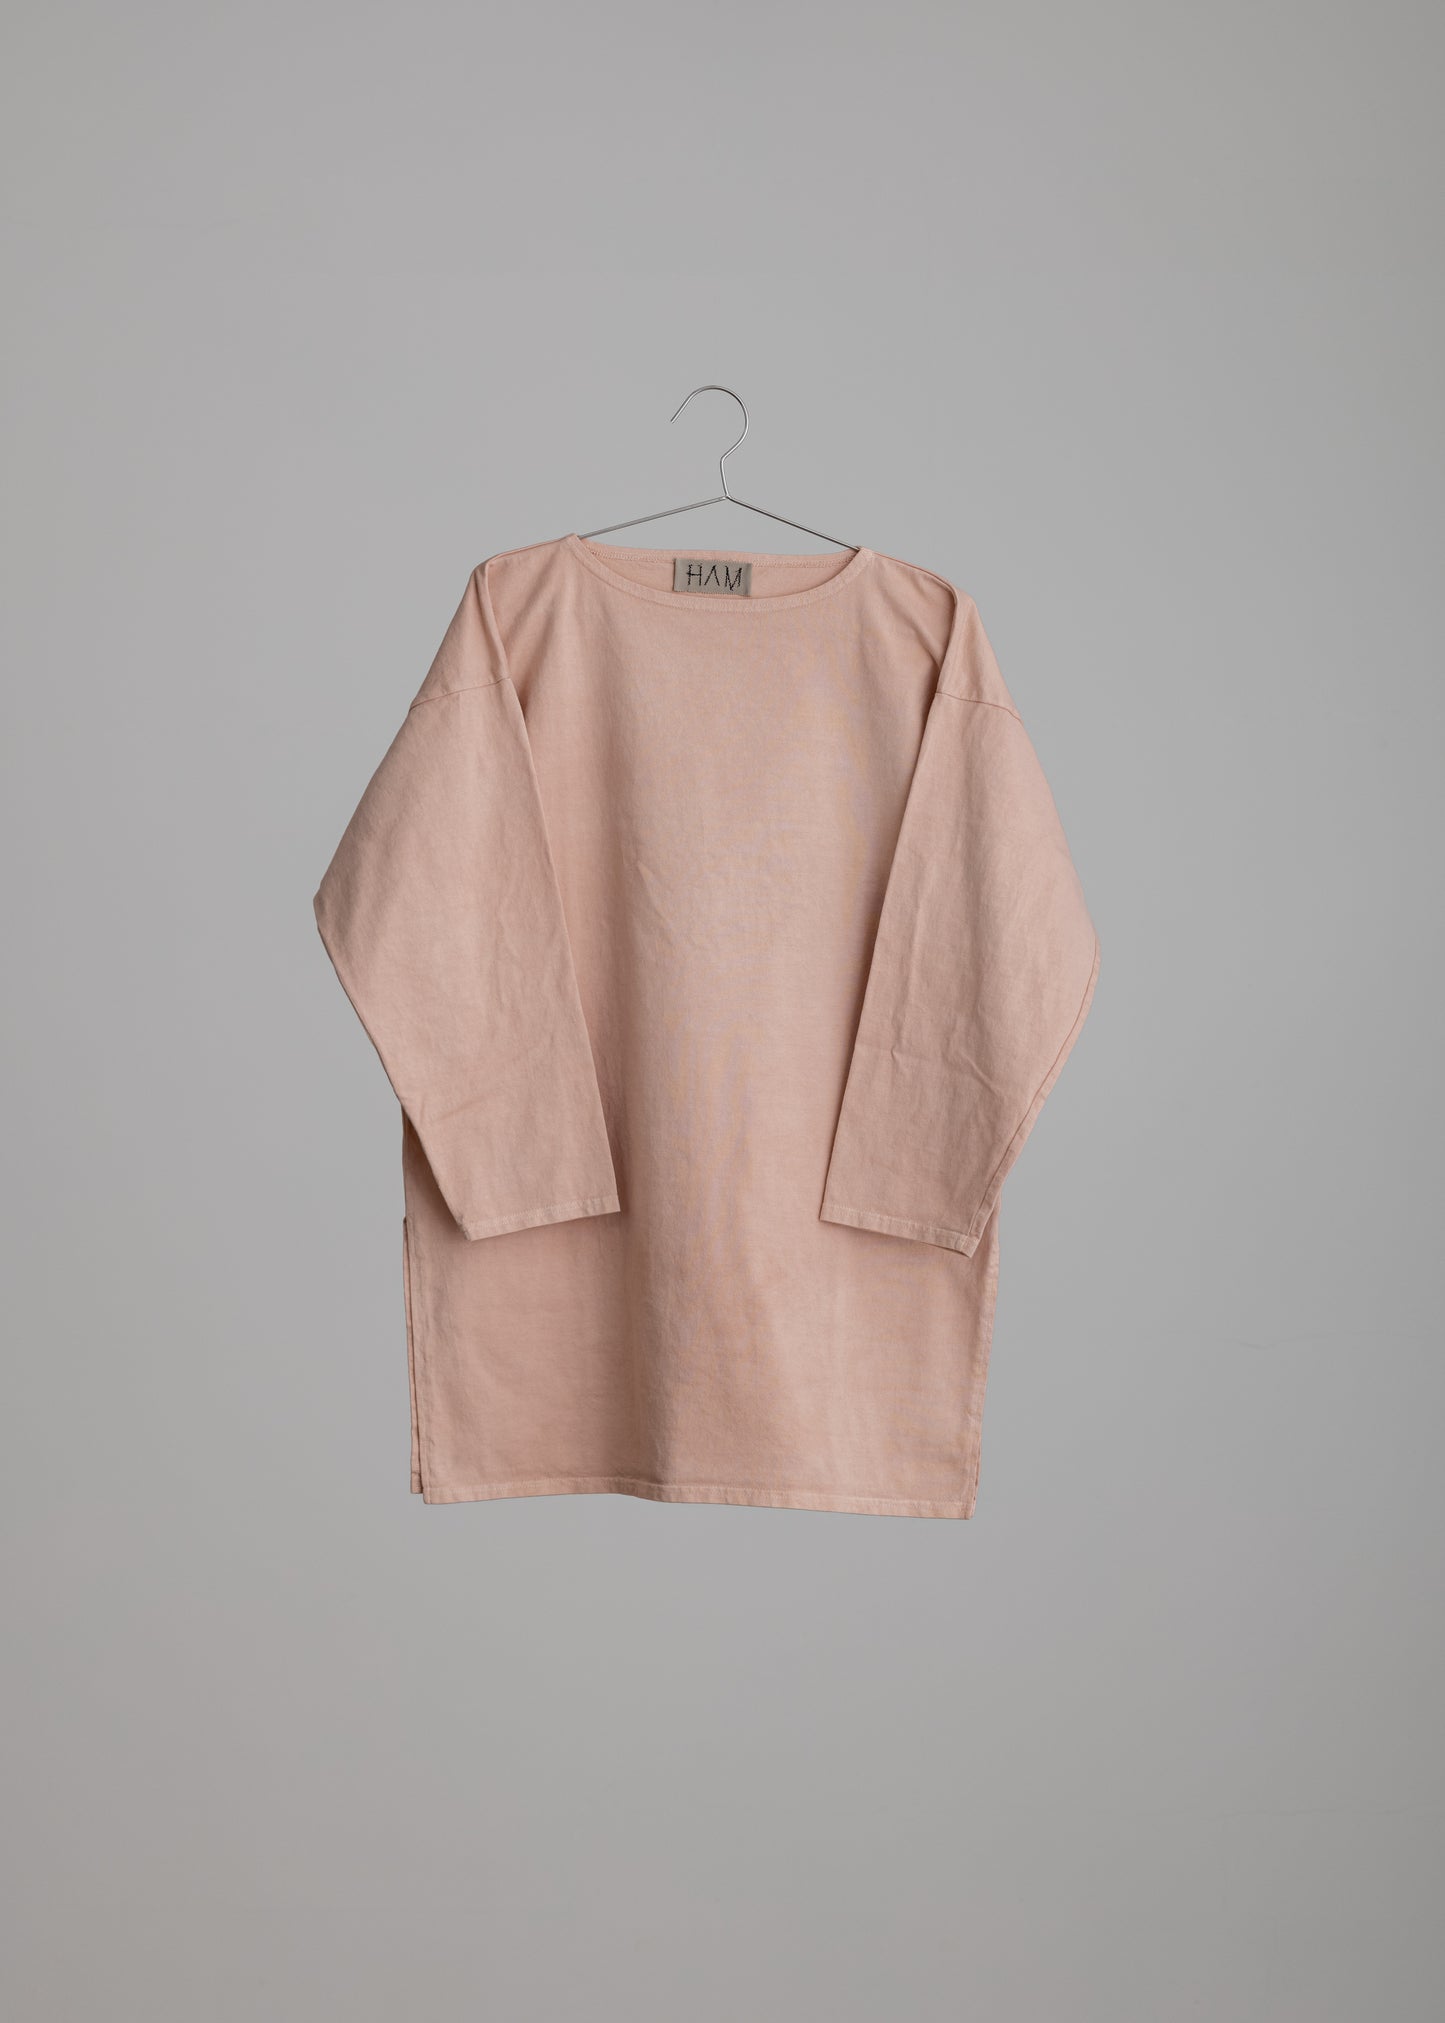 [ HAM IAM ] Regulations " UME garment dyed 梅染め " classic fisherman basque shirt #middle length c/# plum pink